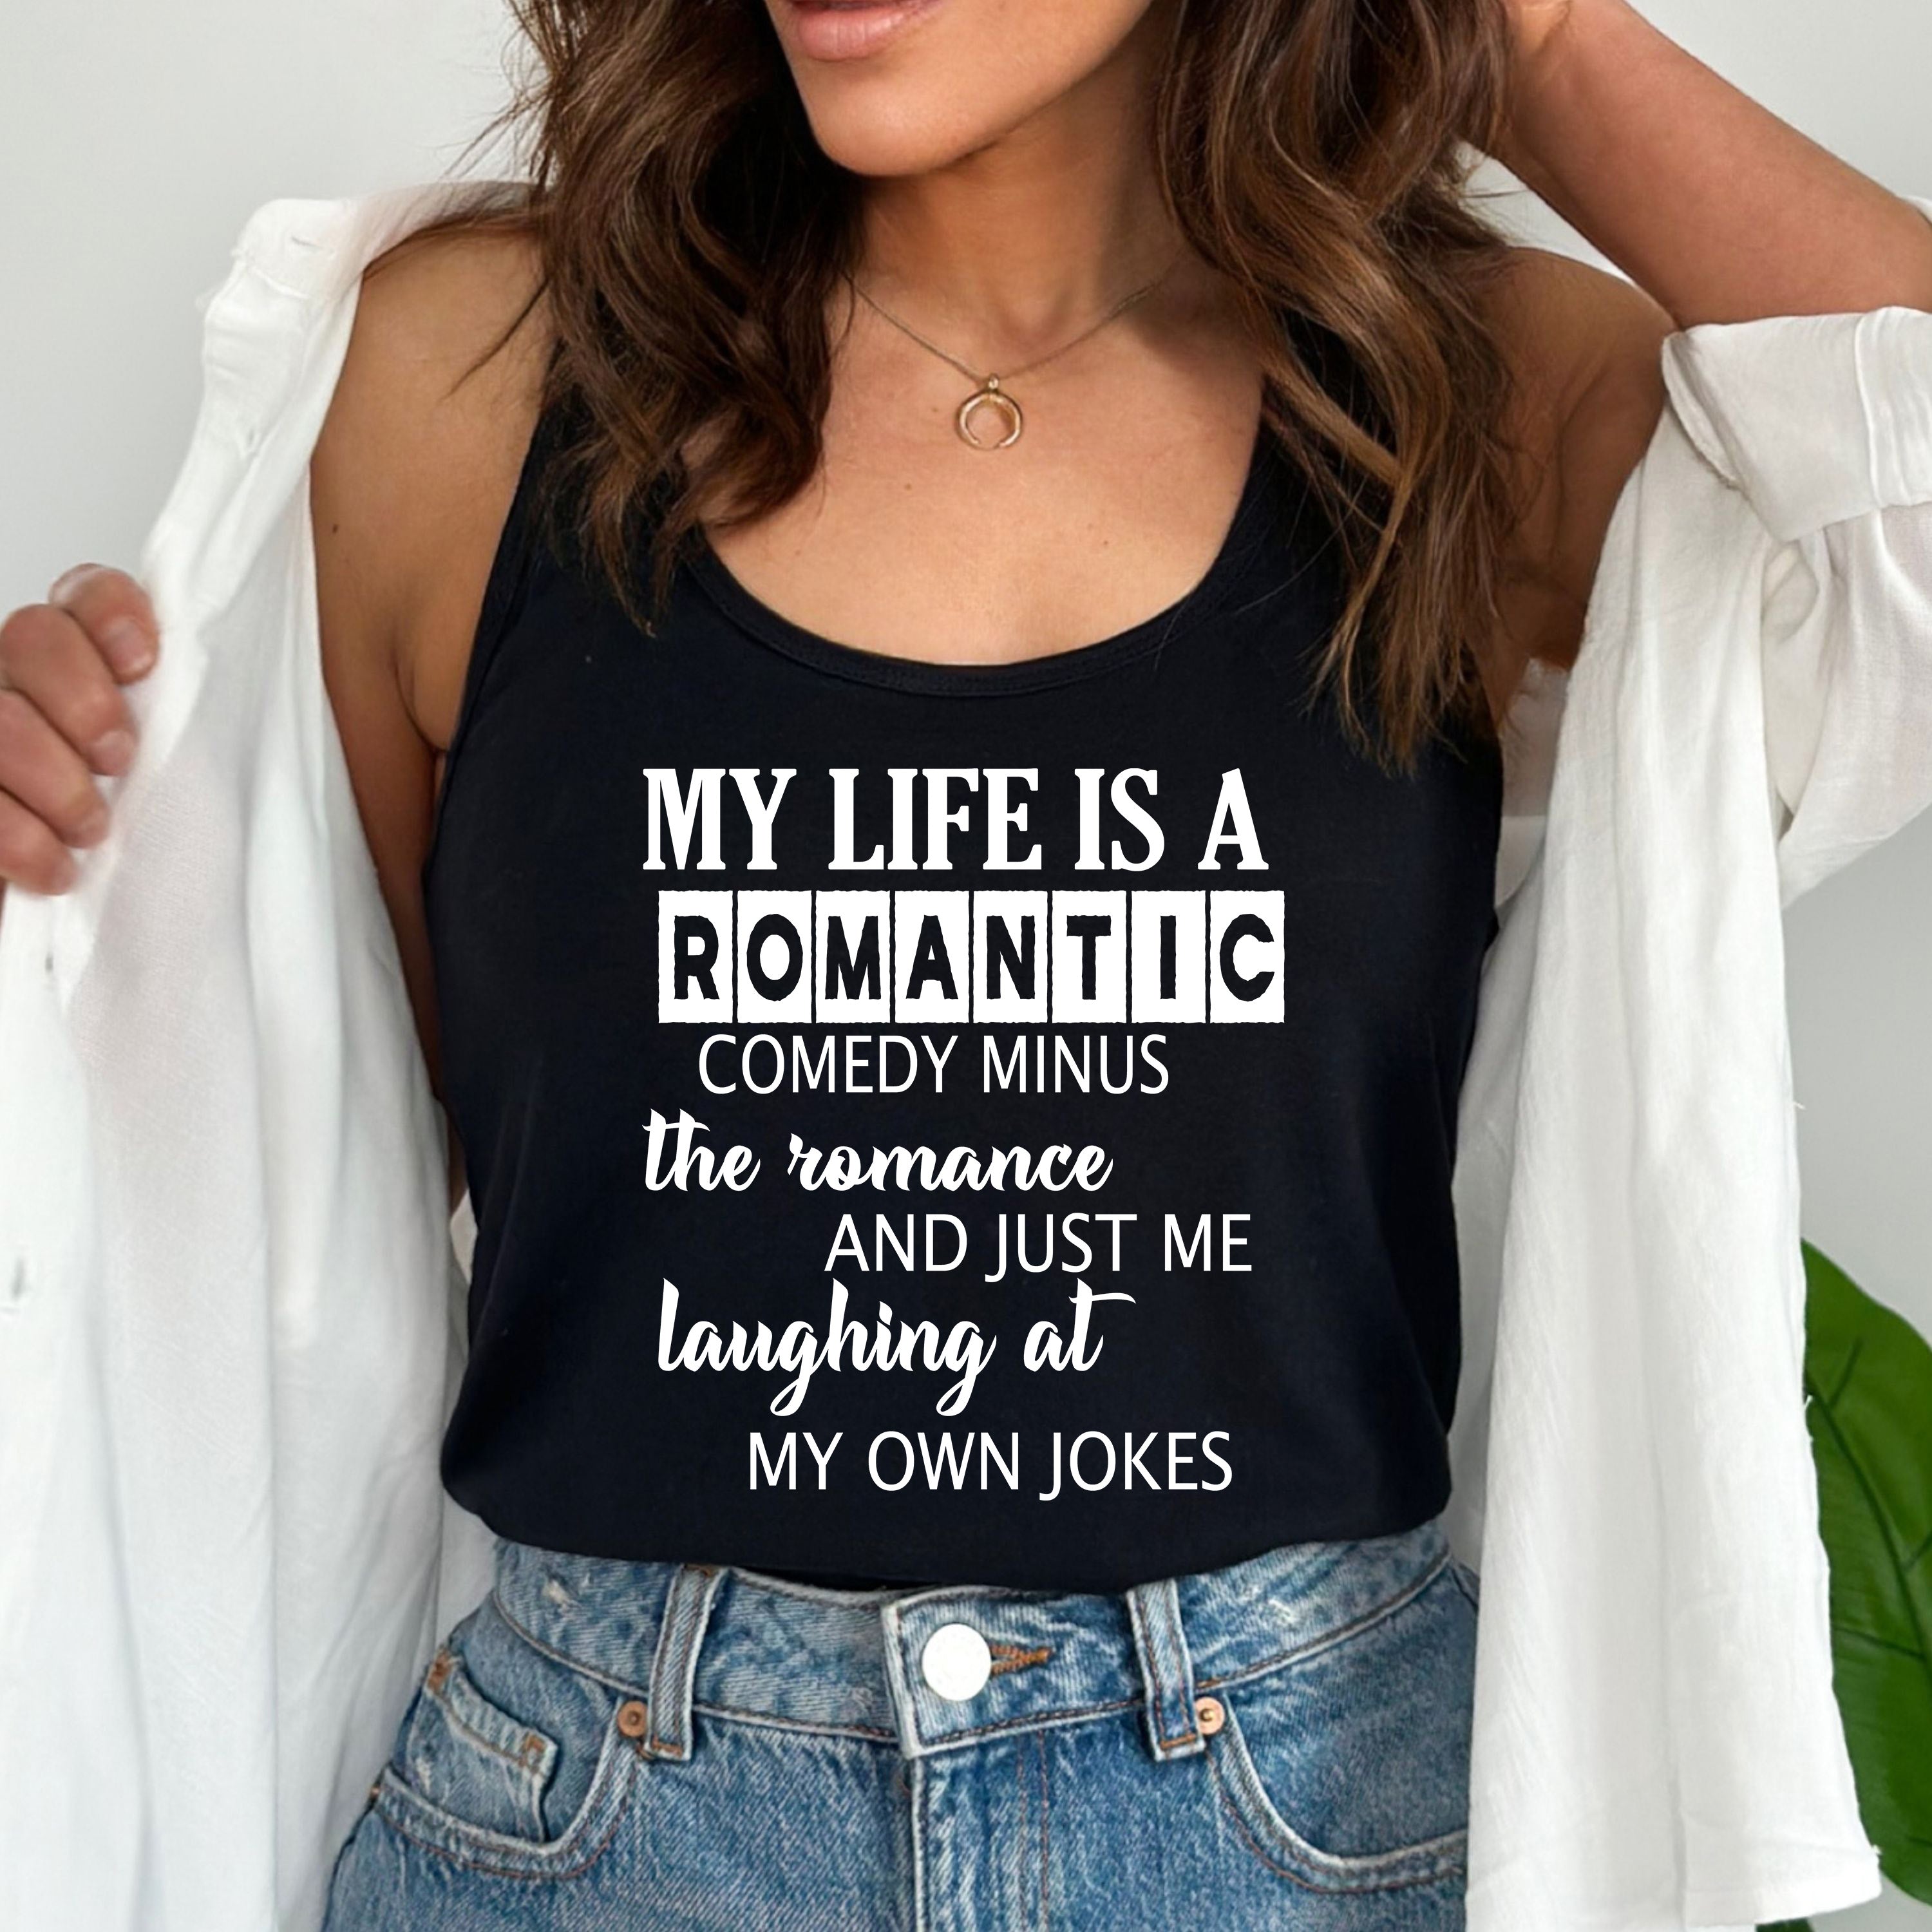 "MY LIFE IS ROMANTIC COMEDY MINUS THE ROMANCE"